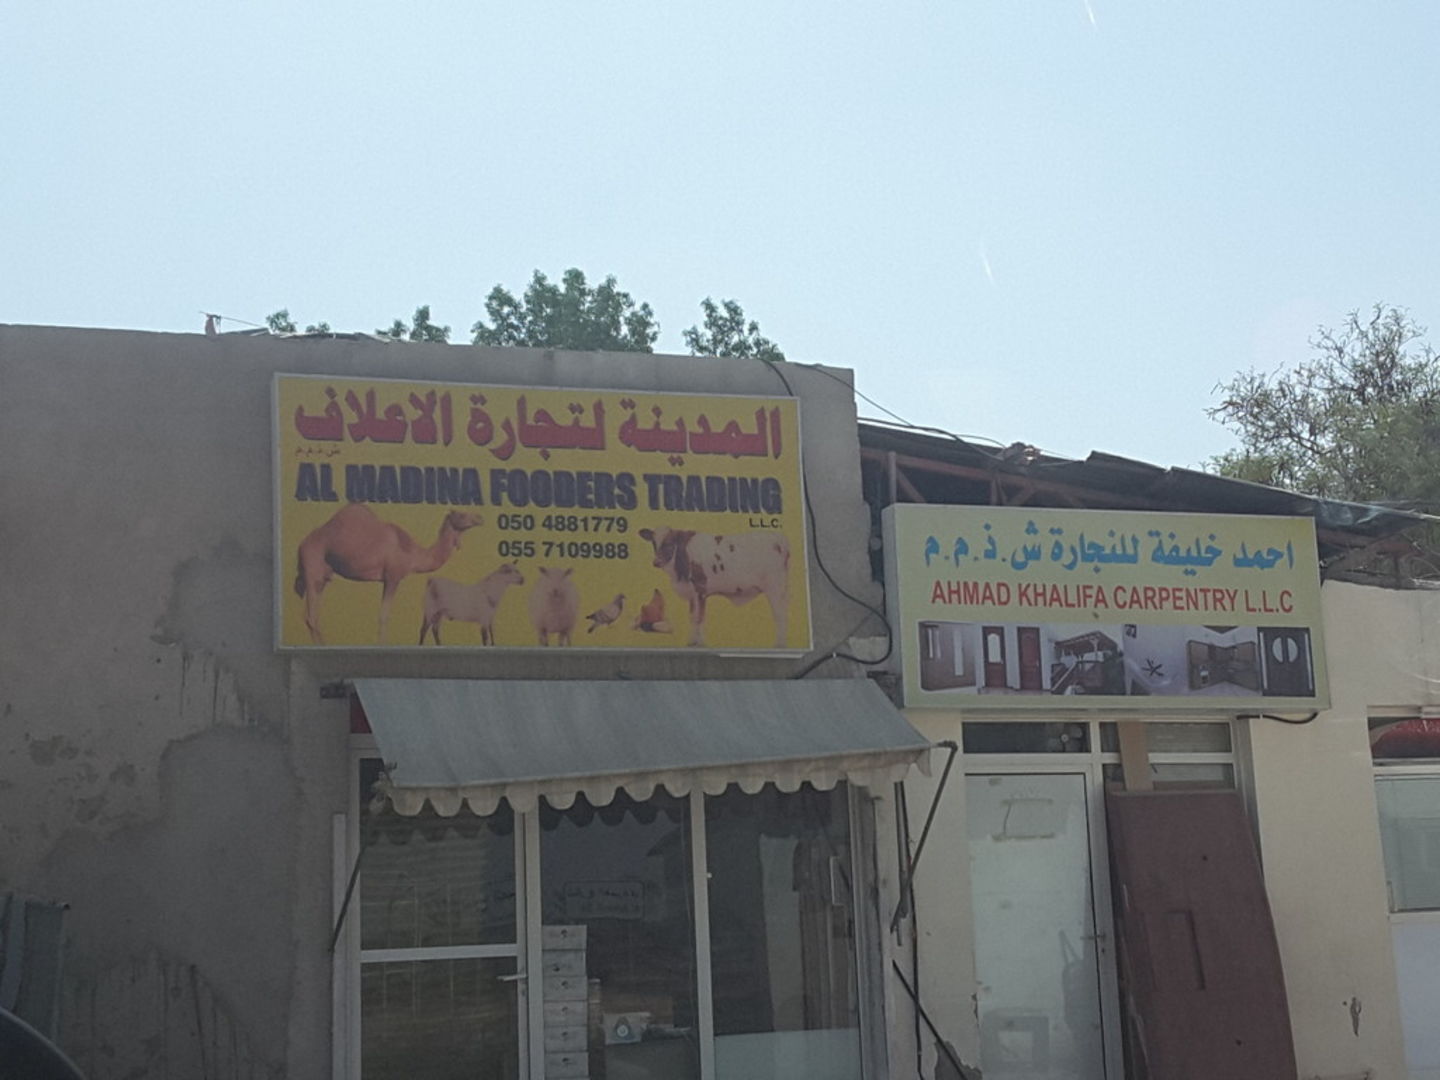 Al Madina Fooders Trading